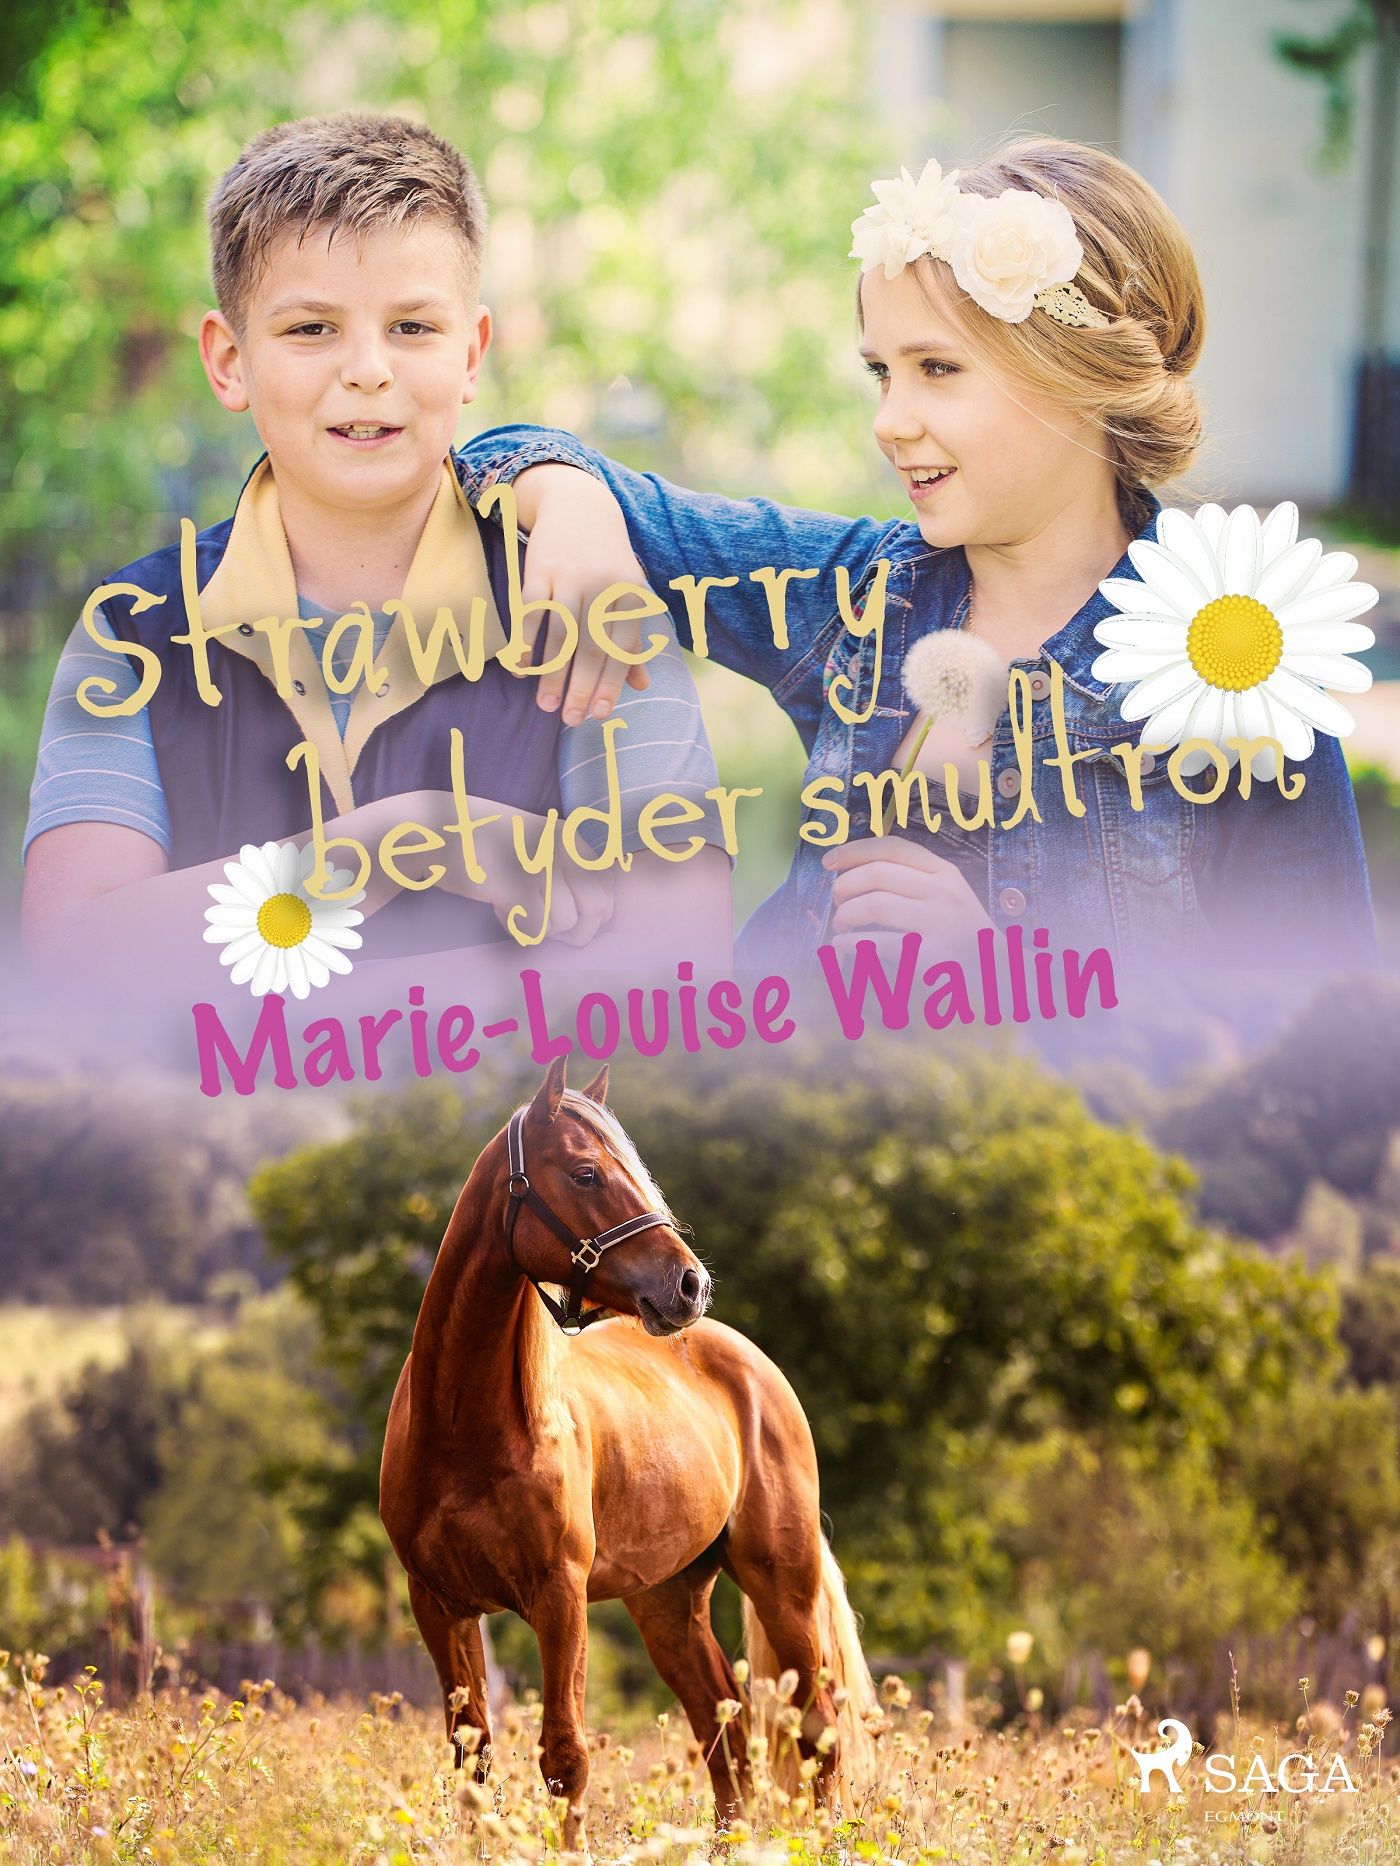 Strawberry betyder smultron, e-bog af Marie-Louise Wallin